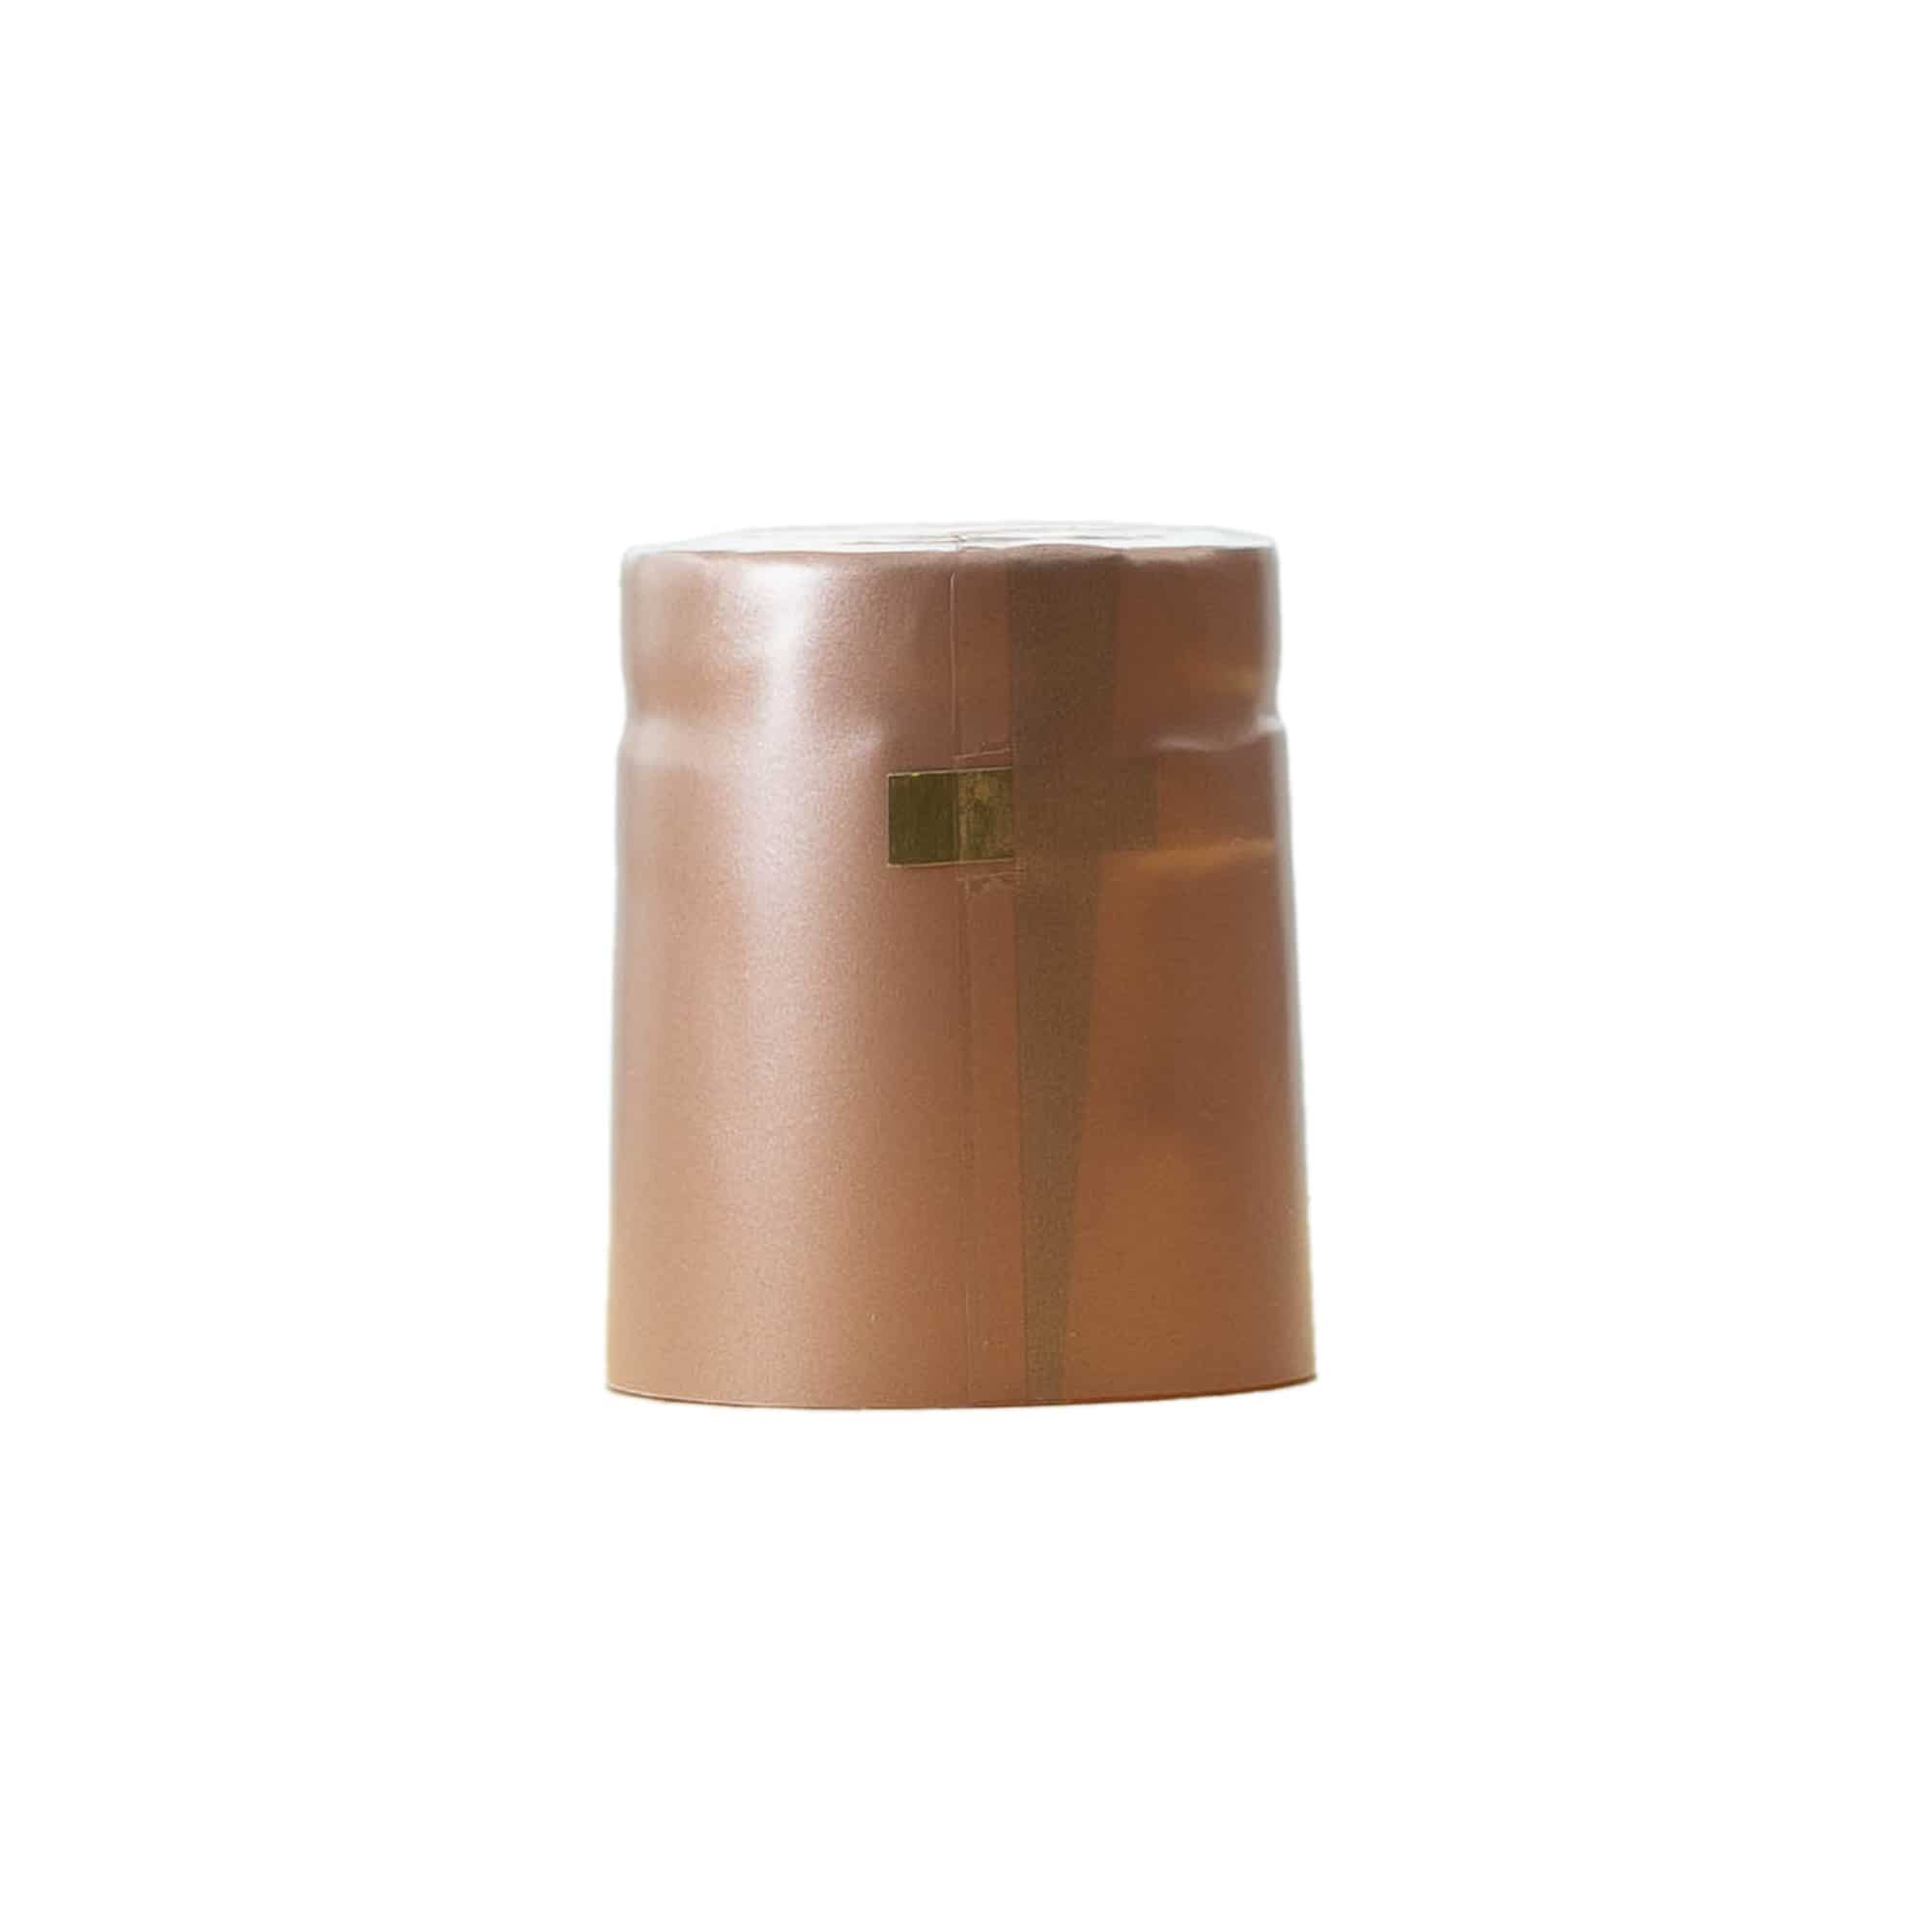 Heat shrink capsule 32x41, PVC plastic, terracotta